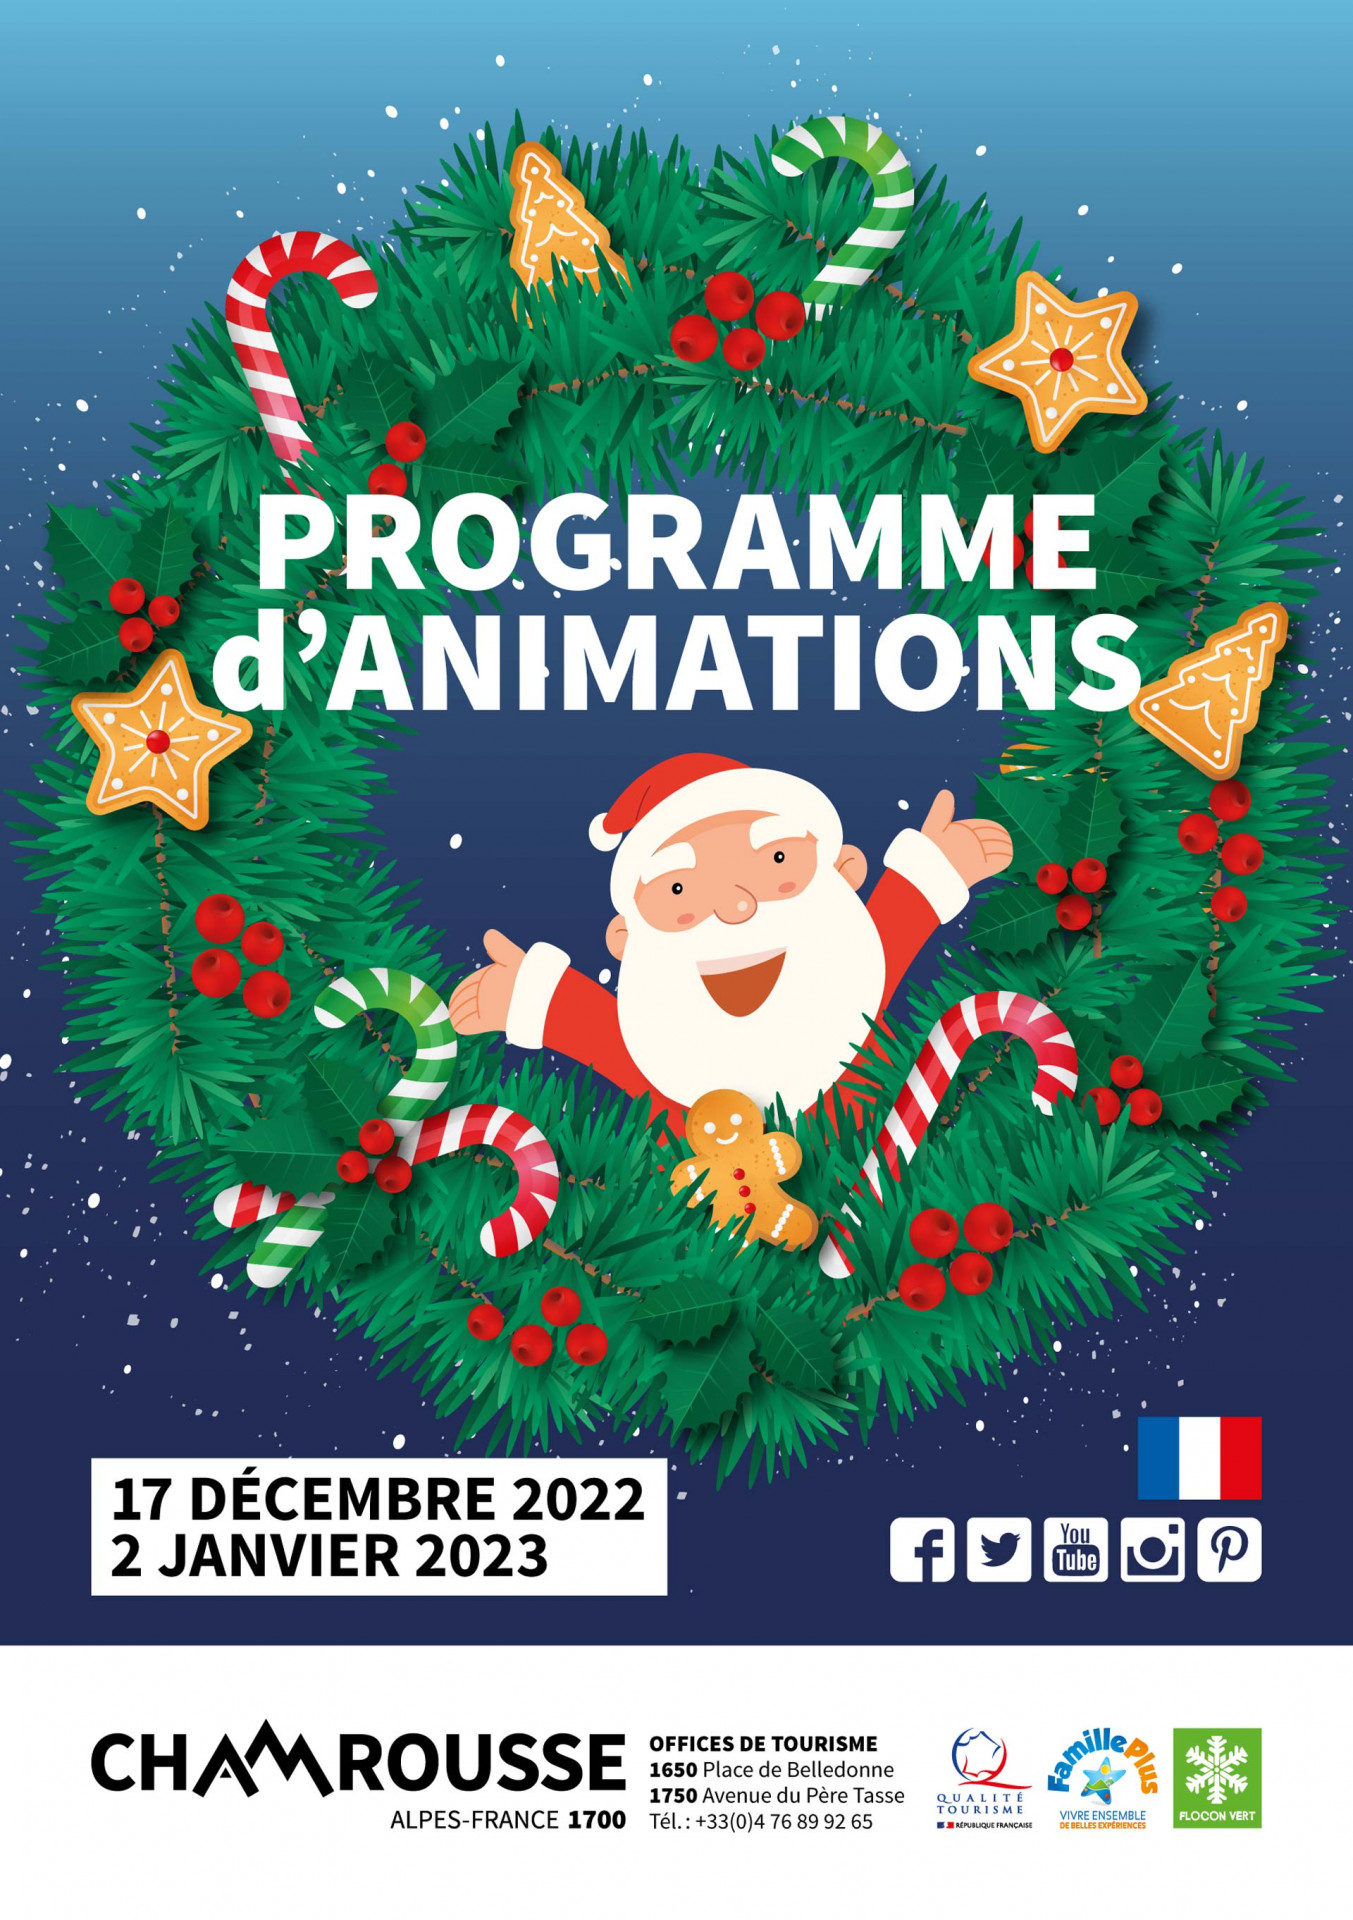 chamrousse-programme-animation-evenement-hiver-decembre-noel-2022-station-ski-montagne-grenoble-isere-alpes-france-3207